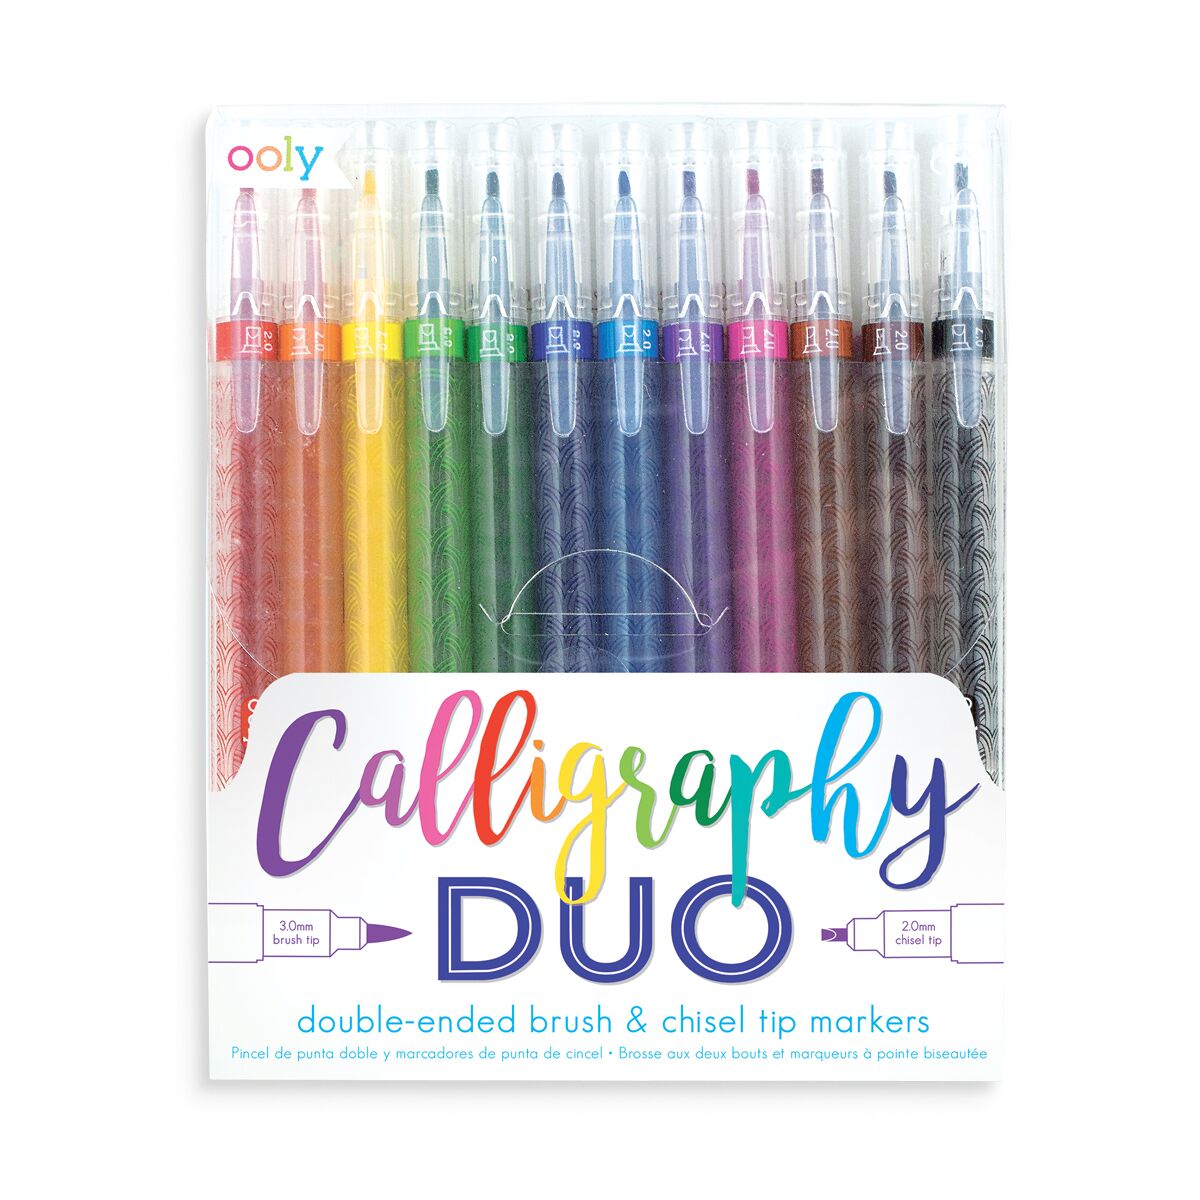 Calligraphy Duo pens